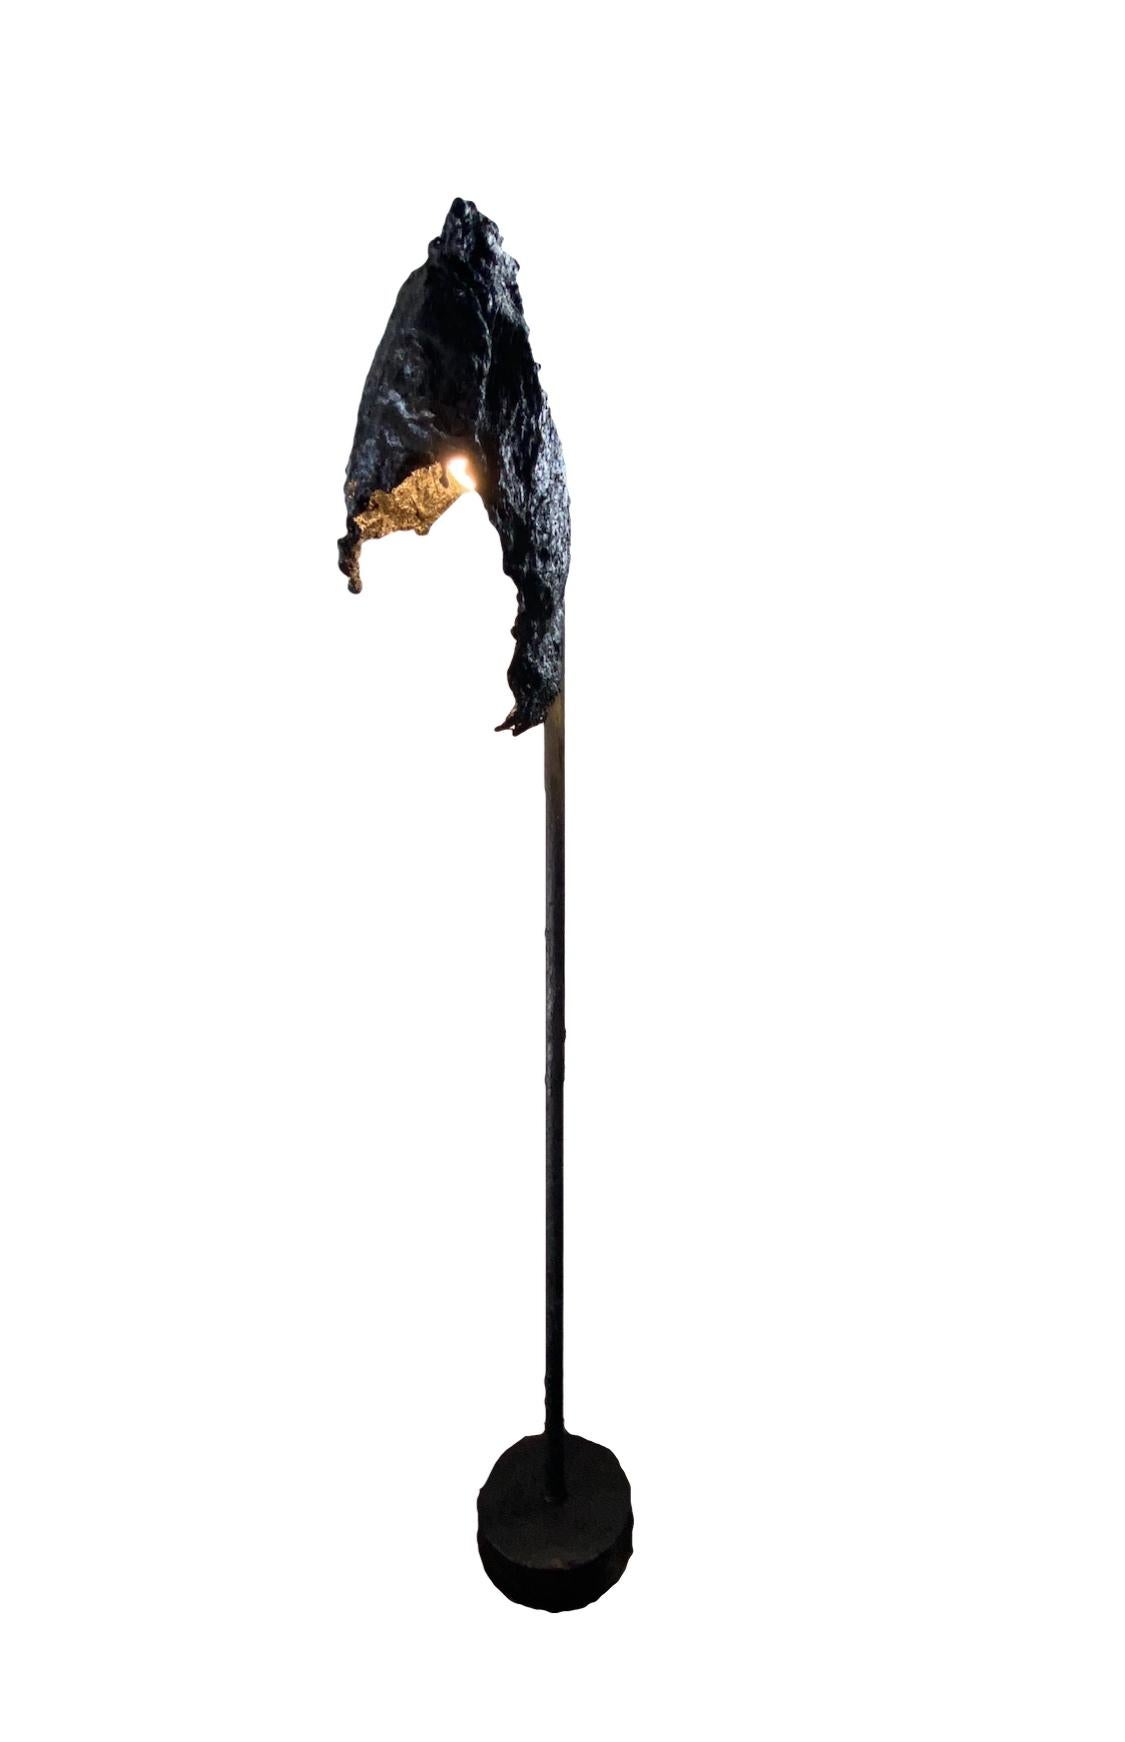 American Black TAR Floor Lamp or Sculpture, 21st Century by Mattia Biagi For Sale